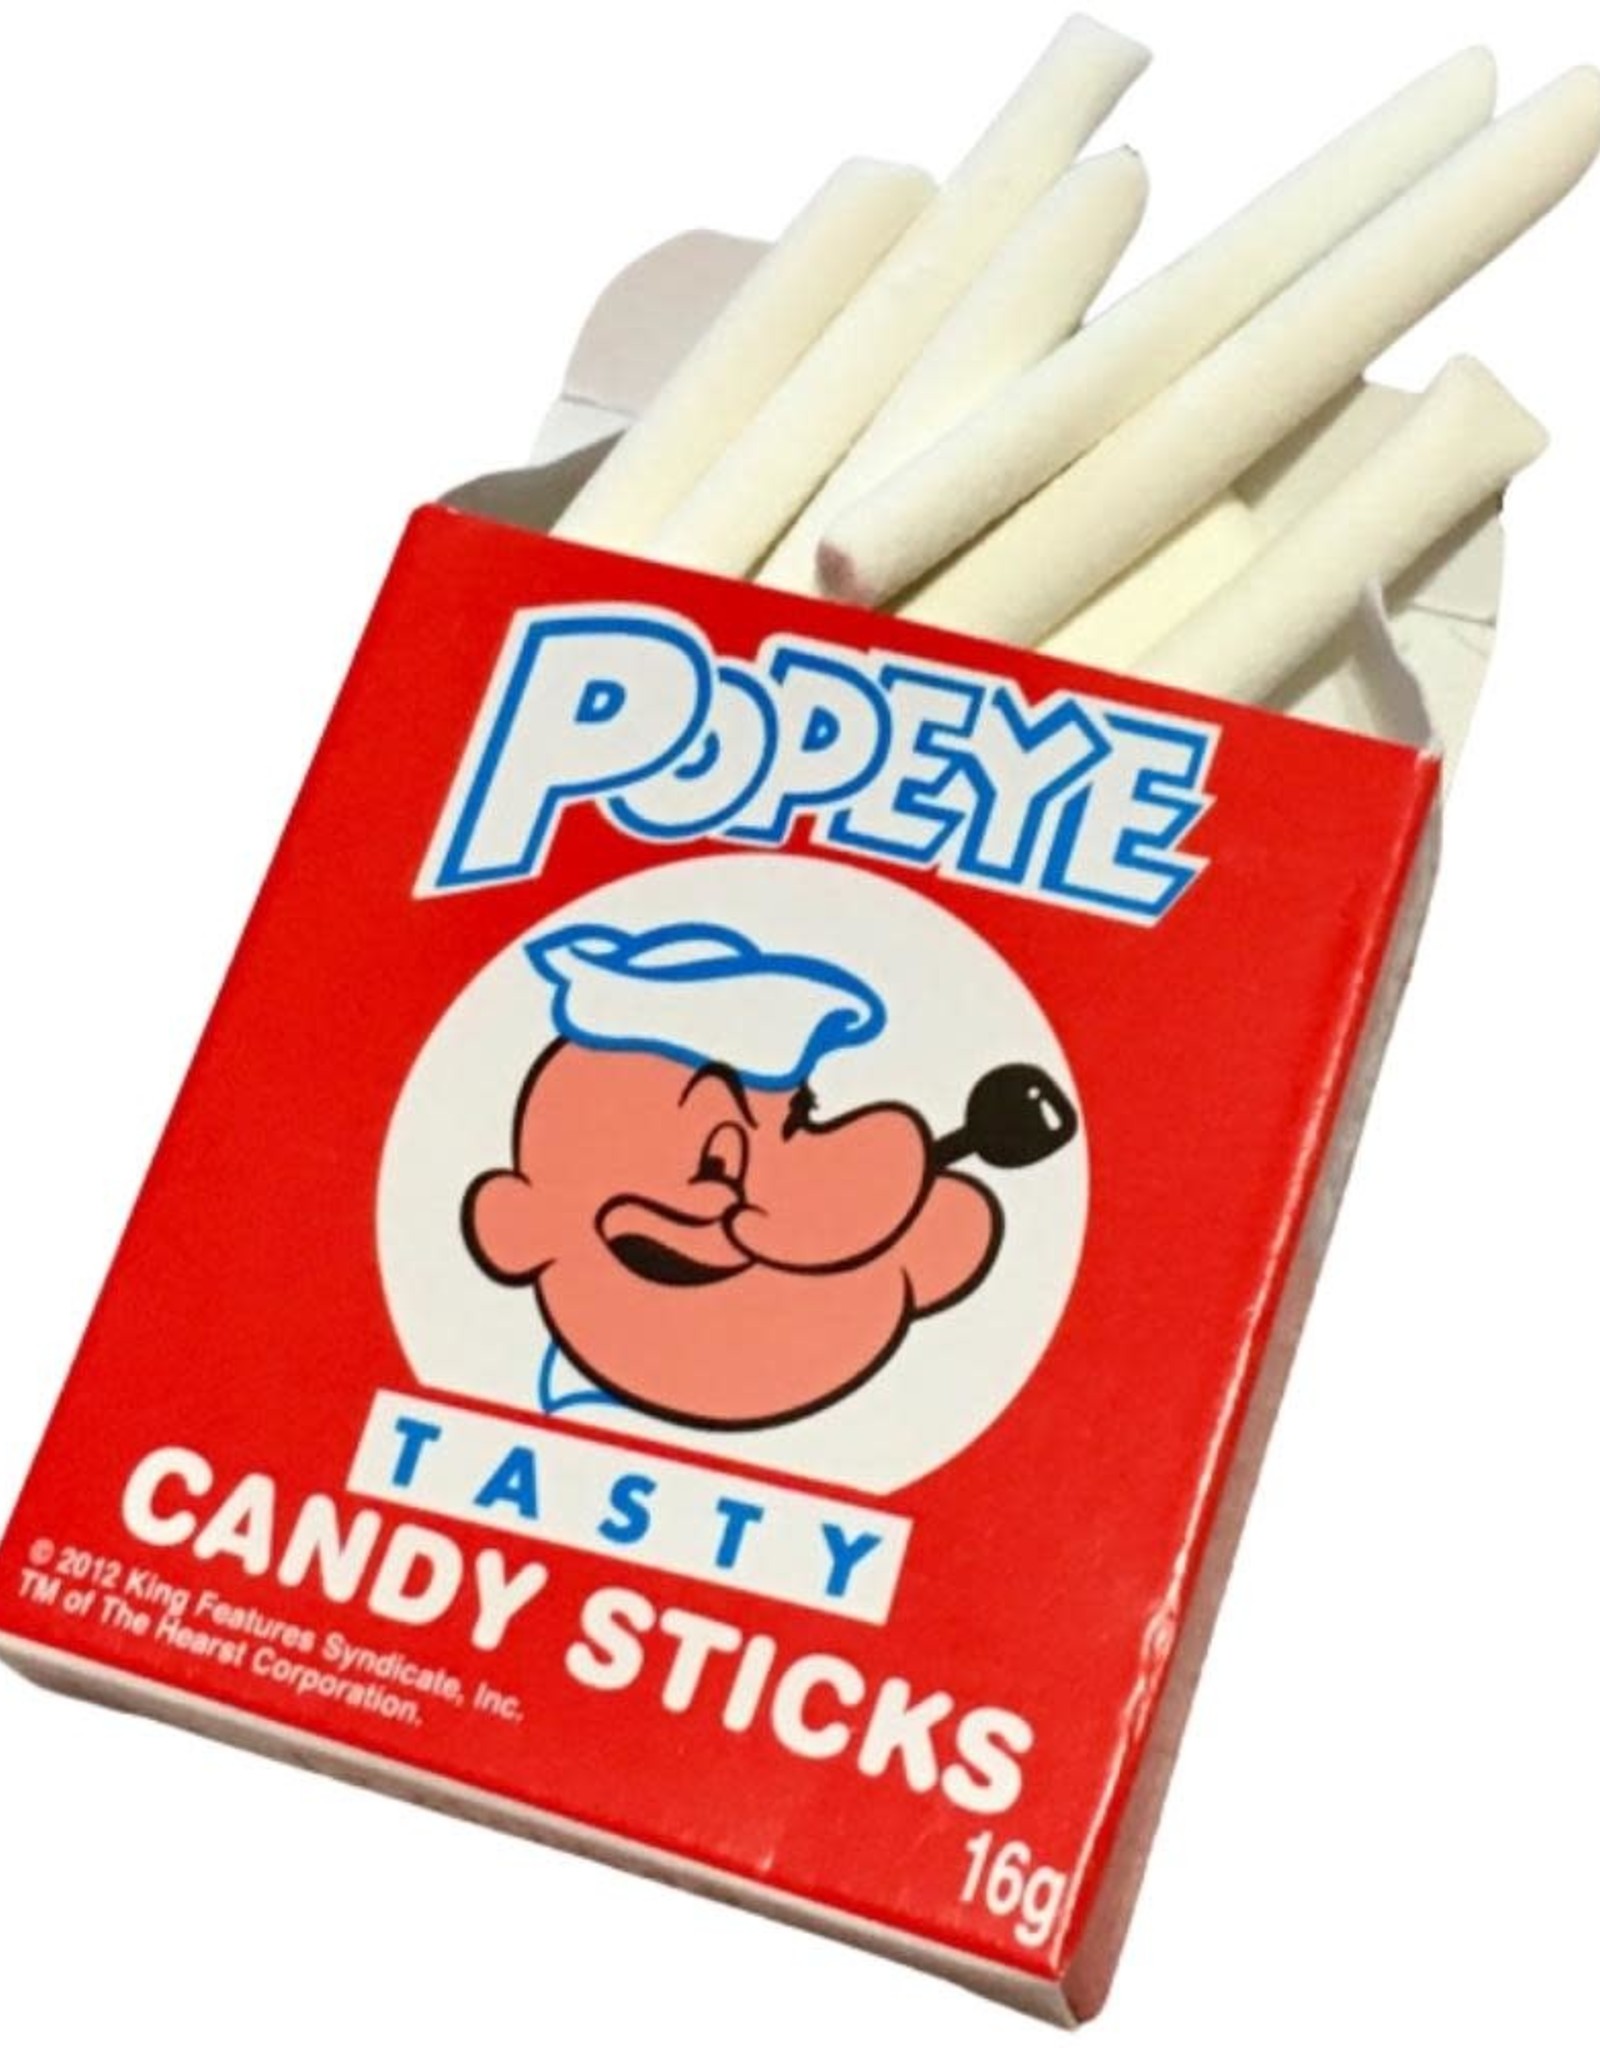 Black Cat Popeye Candy Sticks